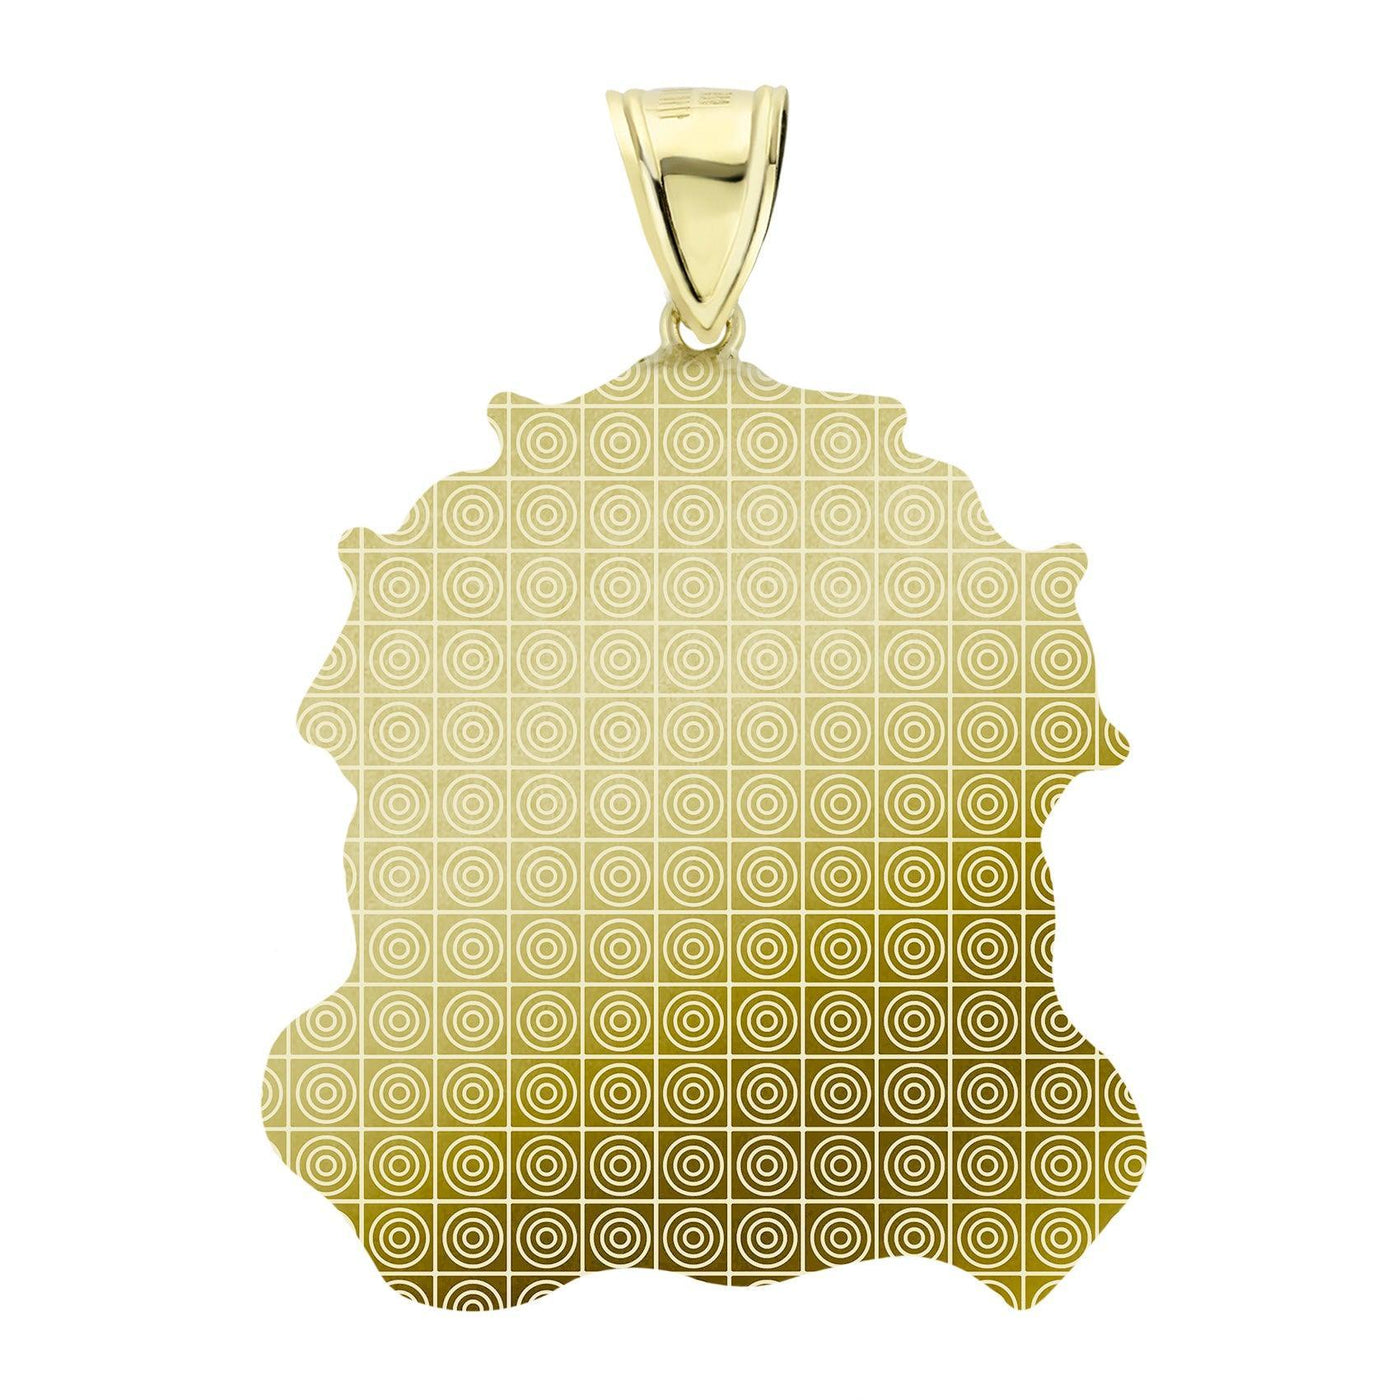 2 1/4" Huge Mens Diamond Cut Jesus Head Charm Pendant 10K Yellow Gold - bayamjewelry